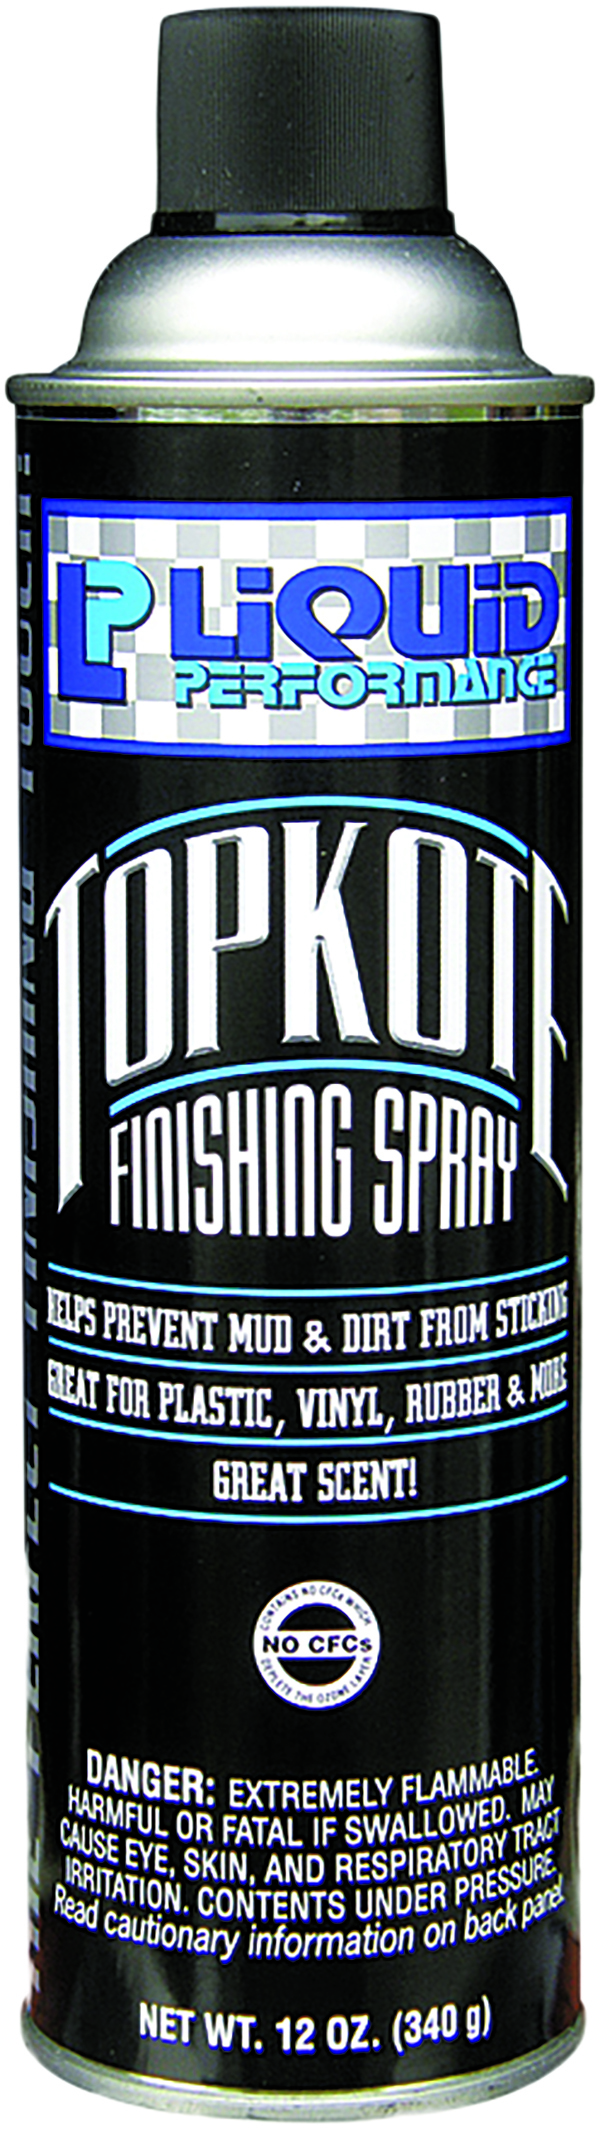 Topkote Finishing Spray Image